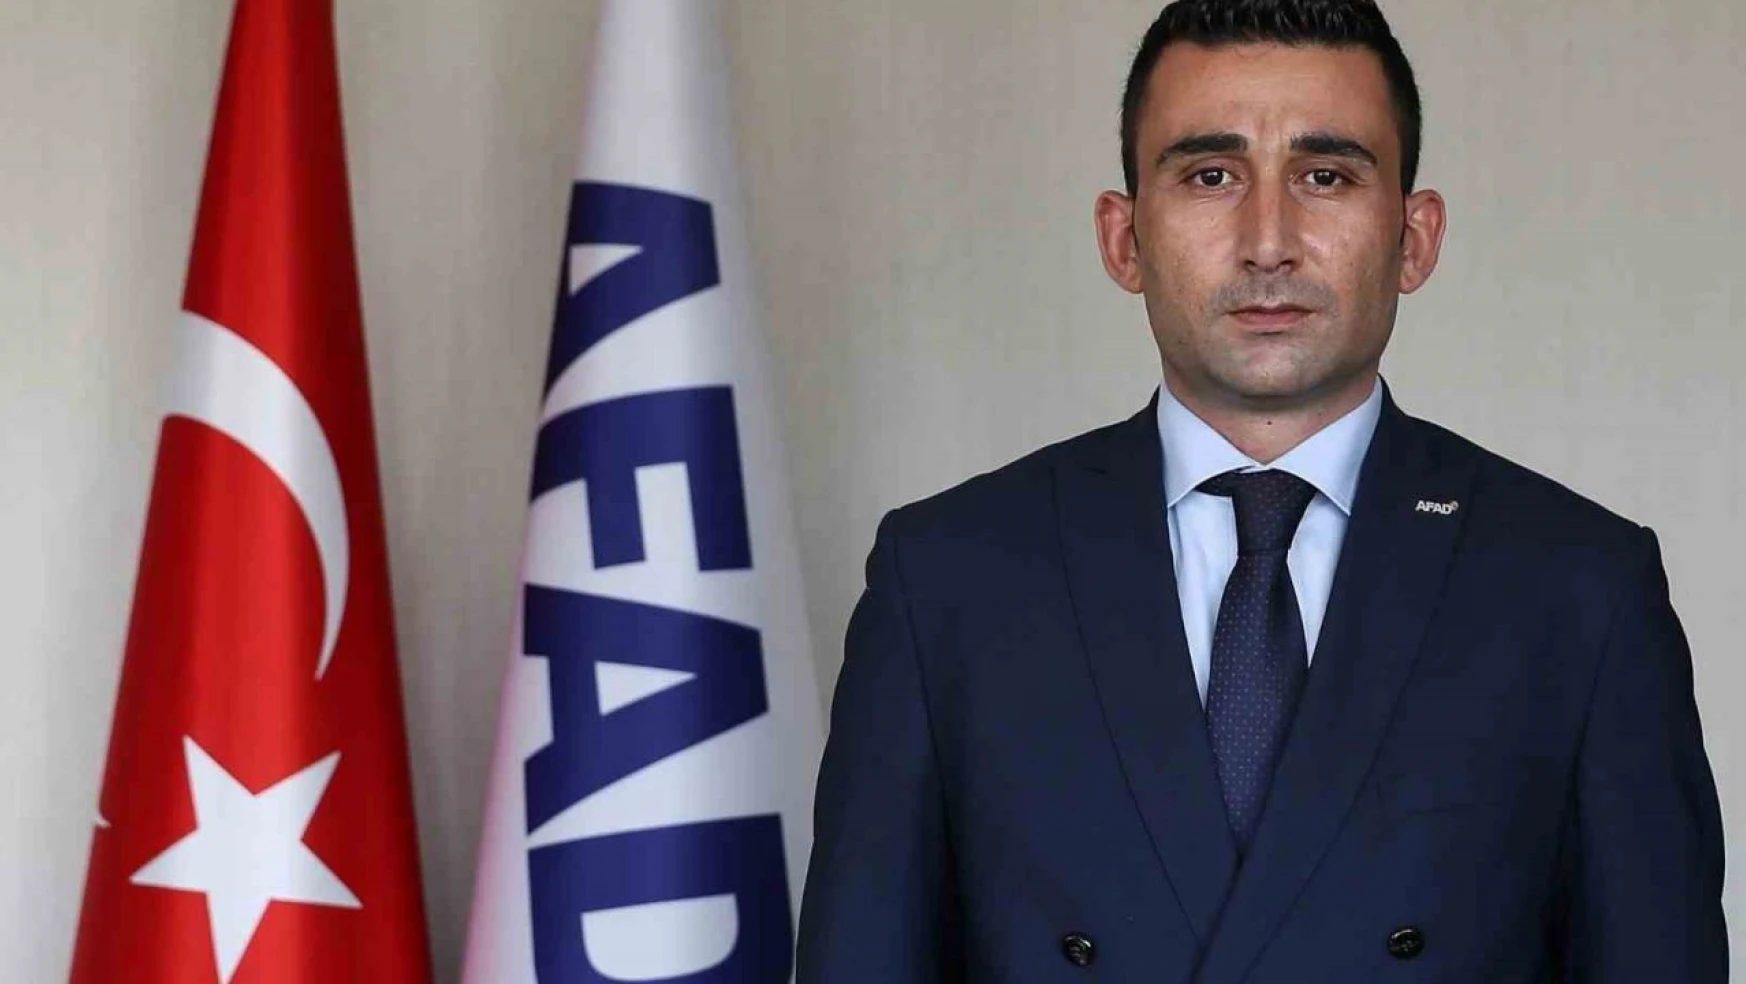 Bolu AFAD İl Müdürü Erzincan'a Atandı